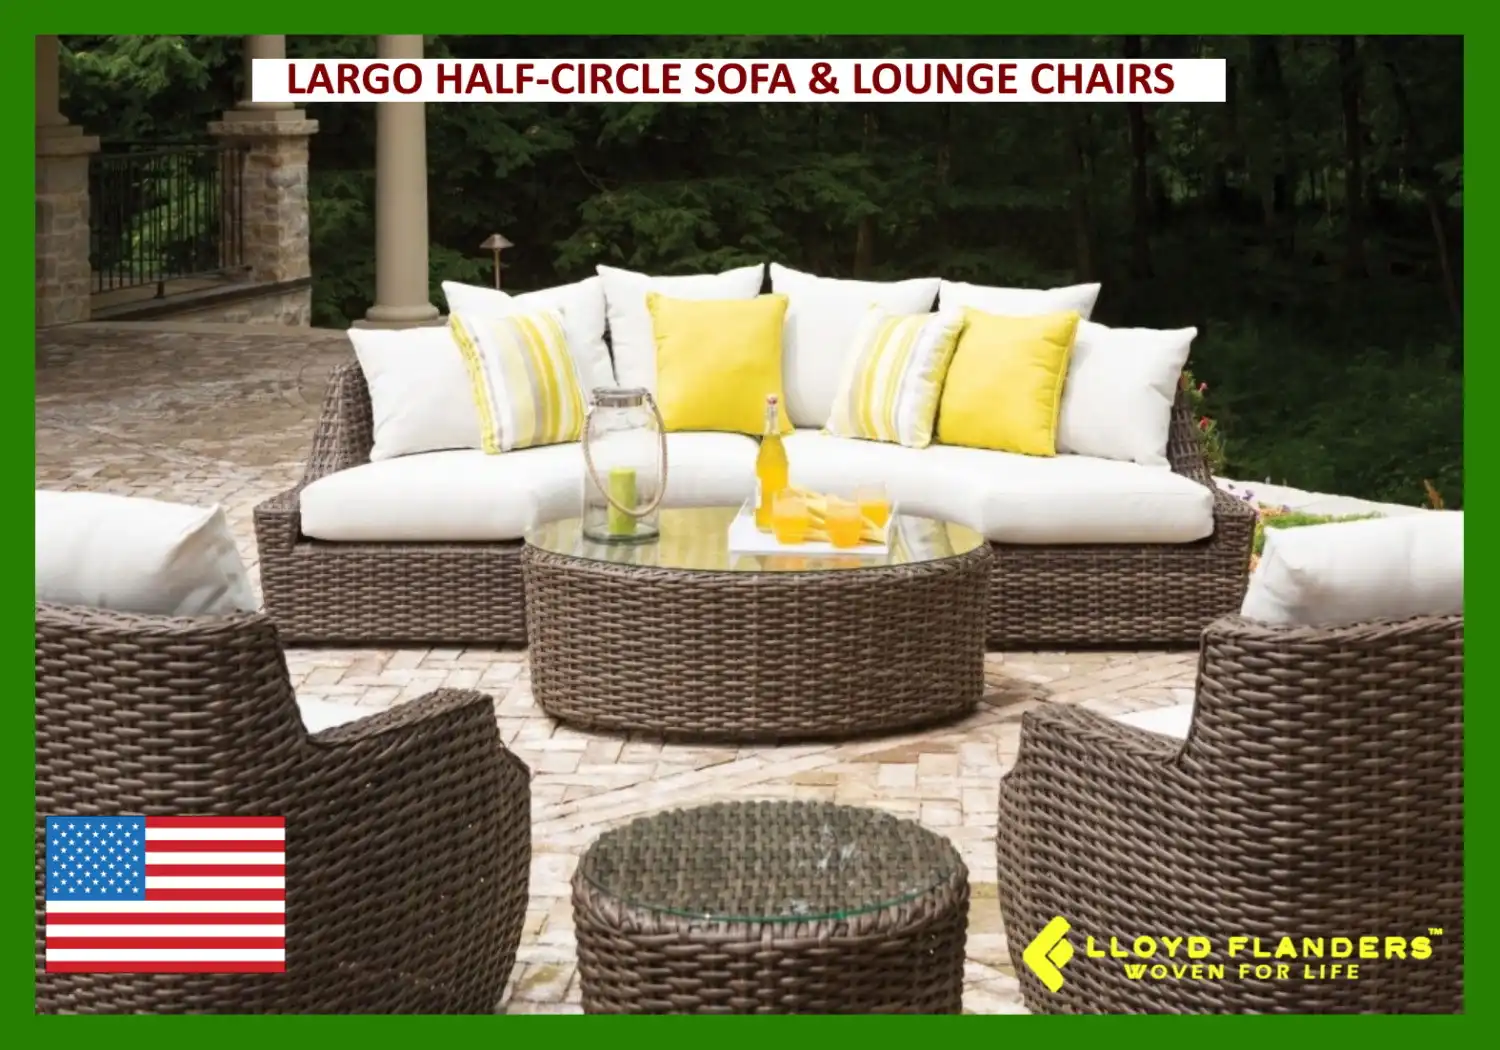 LARGO HALF-CIRCLE SOFA & LOUNGE CHAIRS